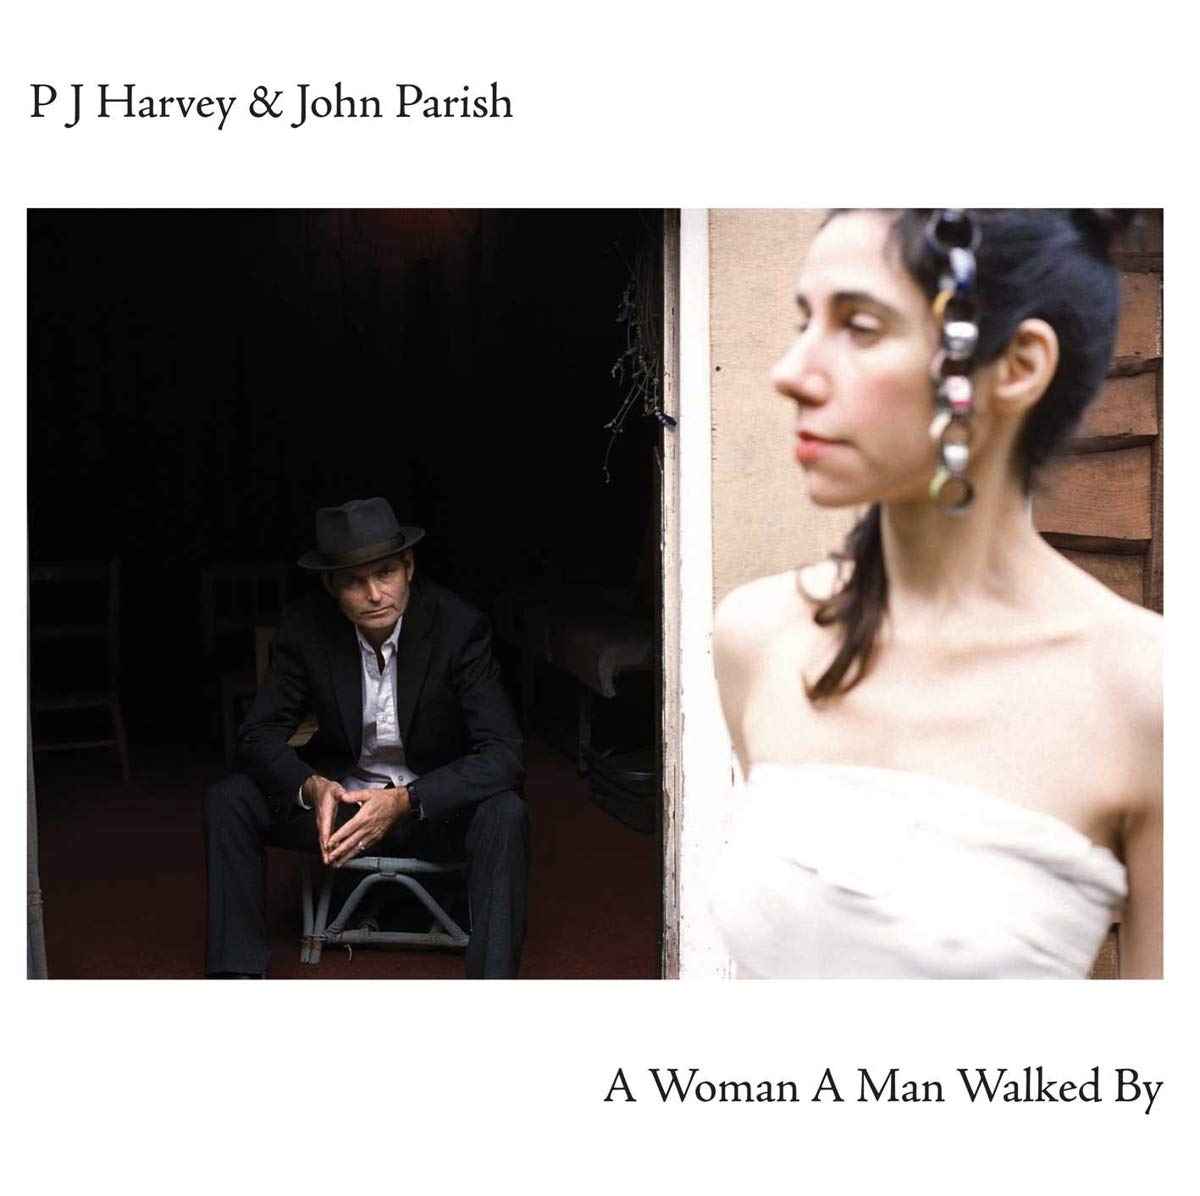 PJ Harvey & John Parish "A Woman A Man Walked" LP